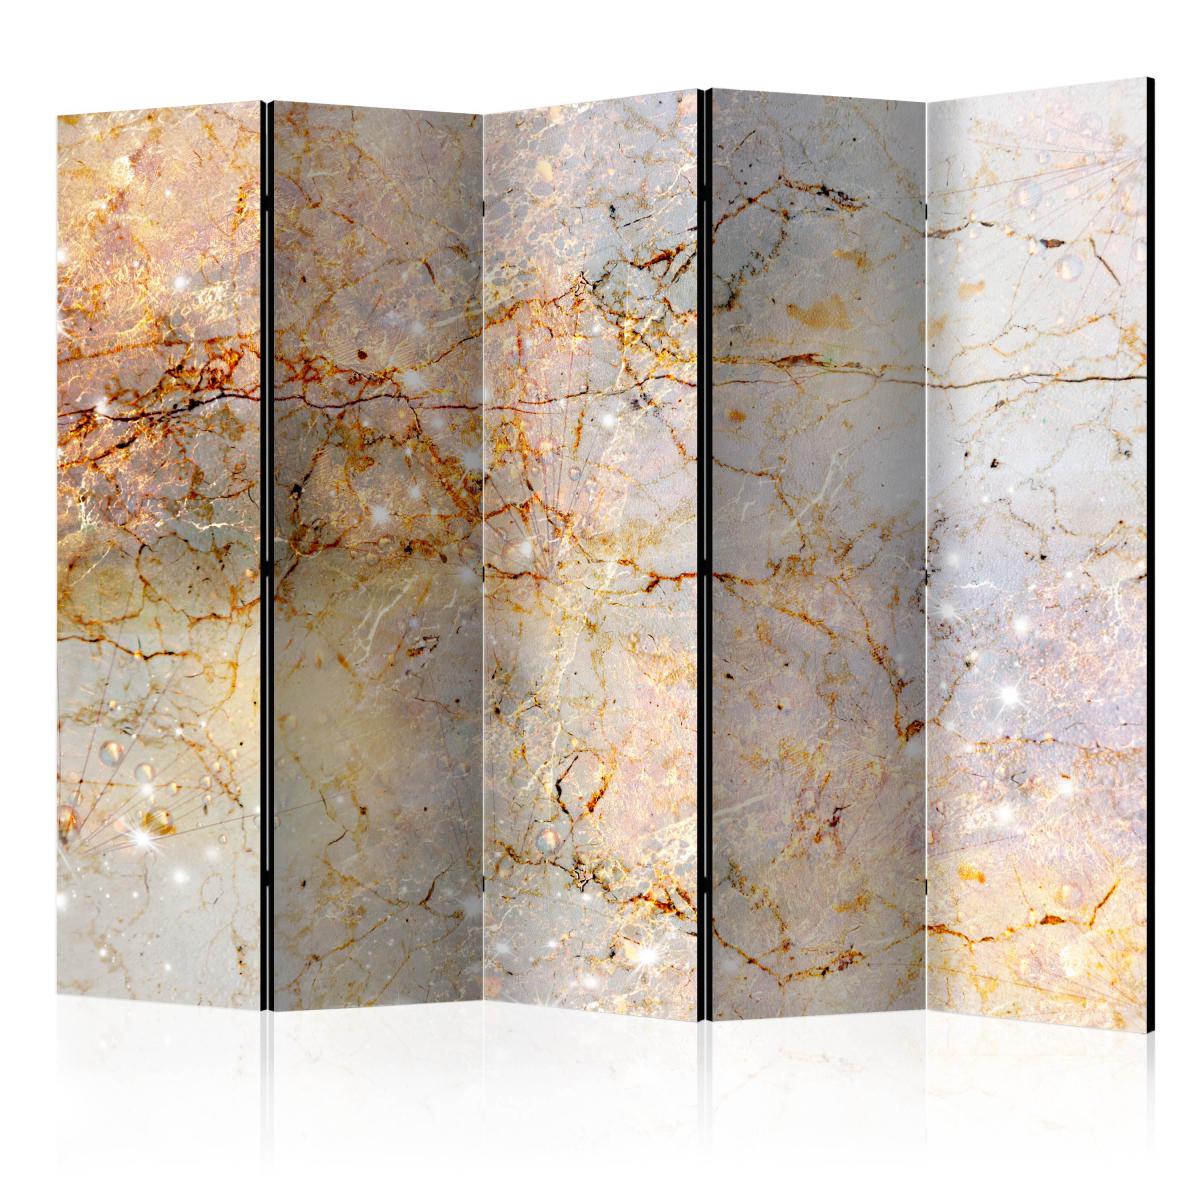 Bimago - Paravent 5 volets - Enchanted in Marble II [Room Dividers] - Décoration, image, art | 225x172 cm | XL - Grand Format | - Cloisons